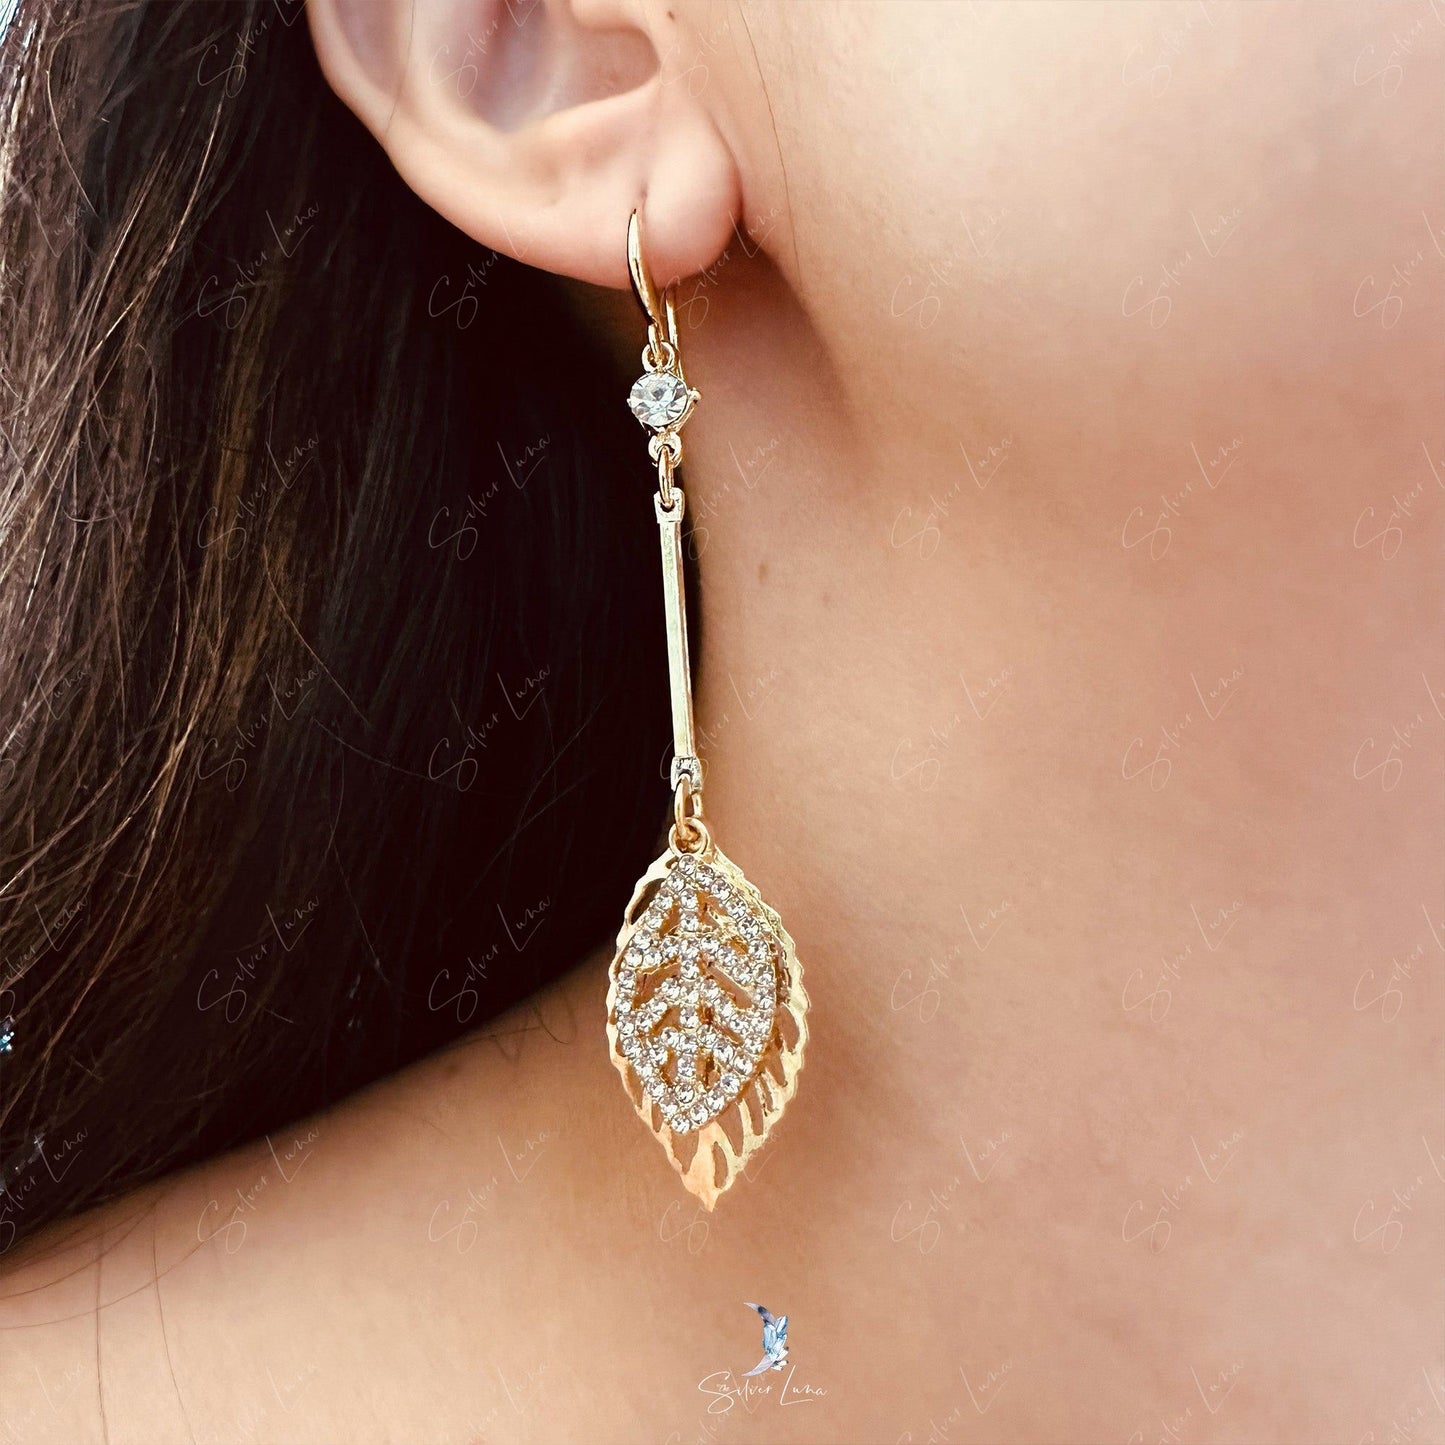 Fashion dangle drop leaf earrings